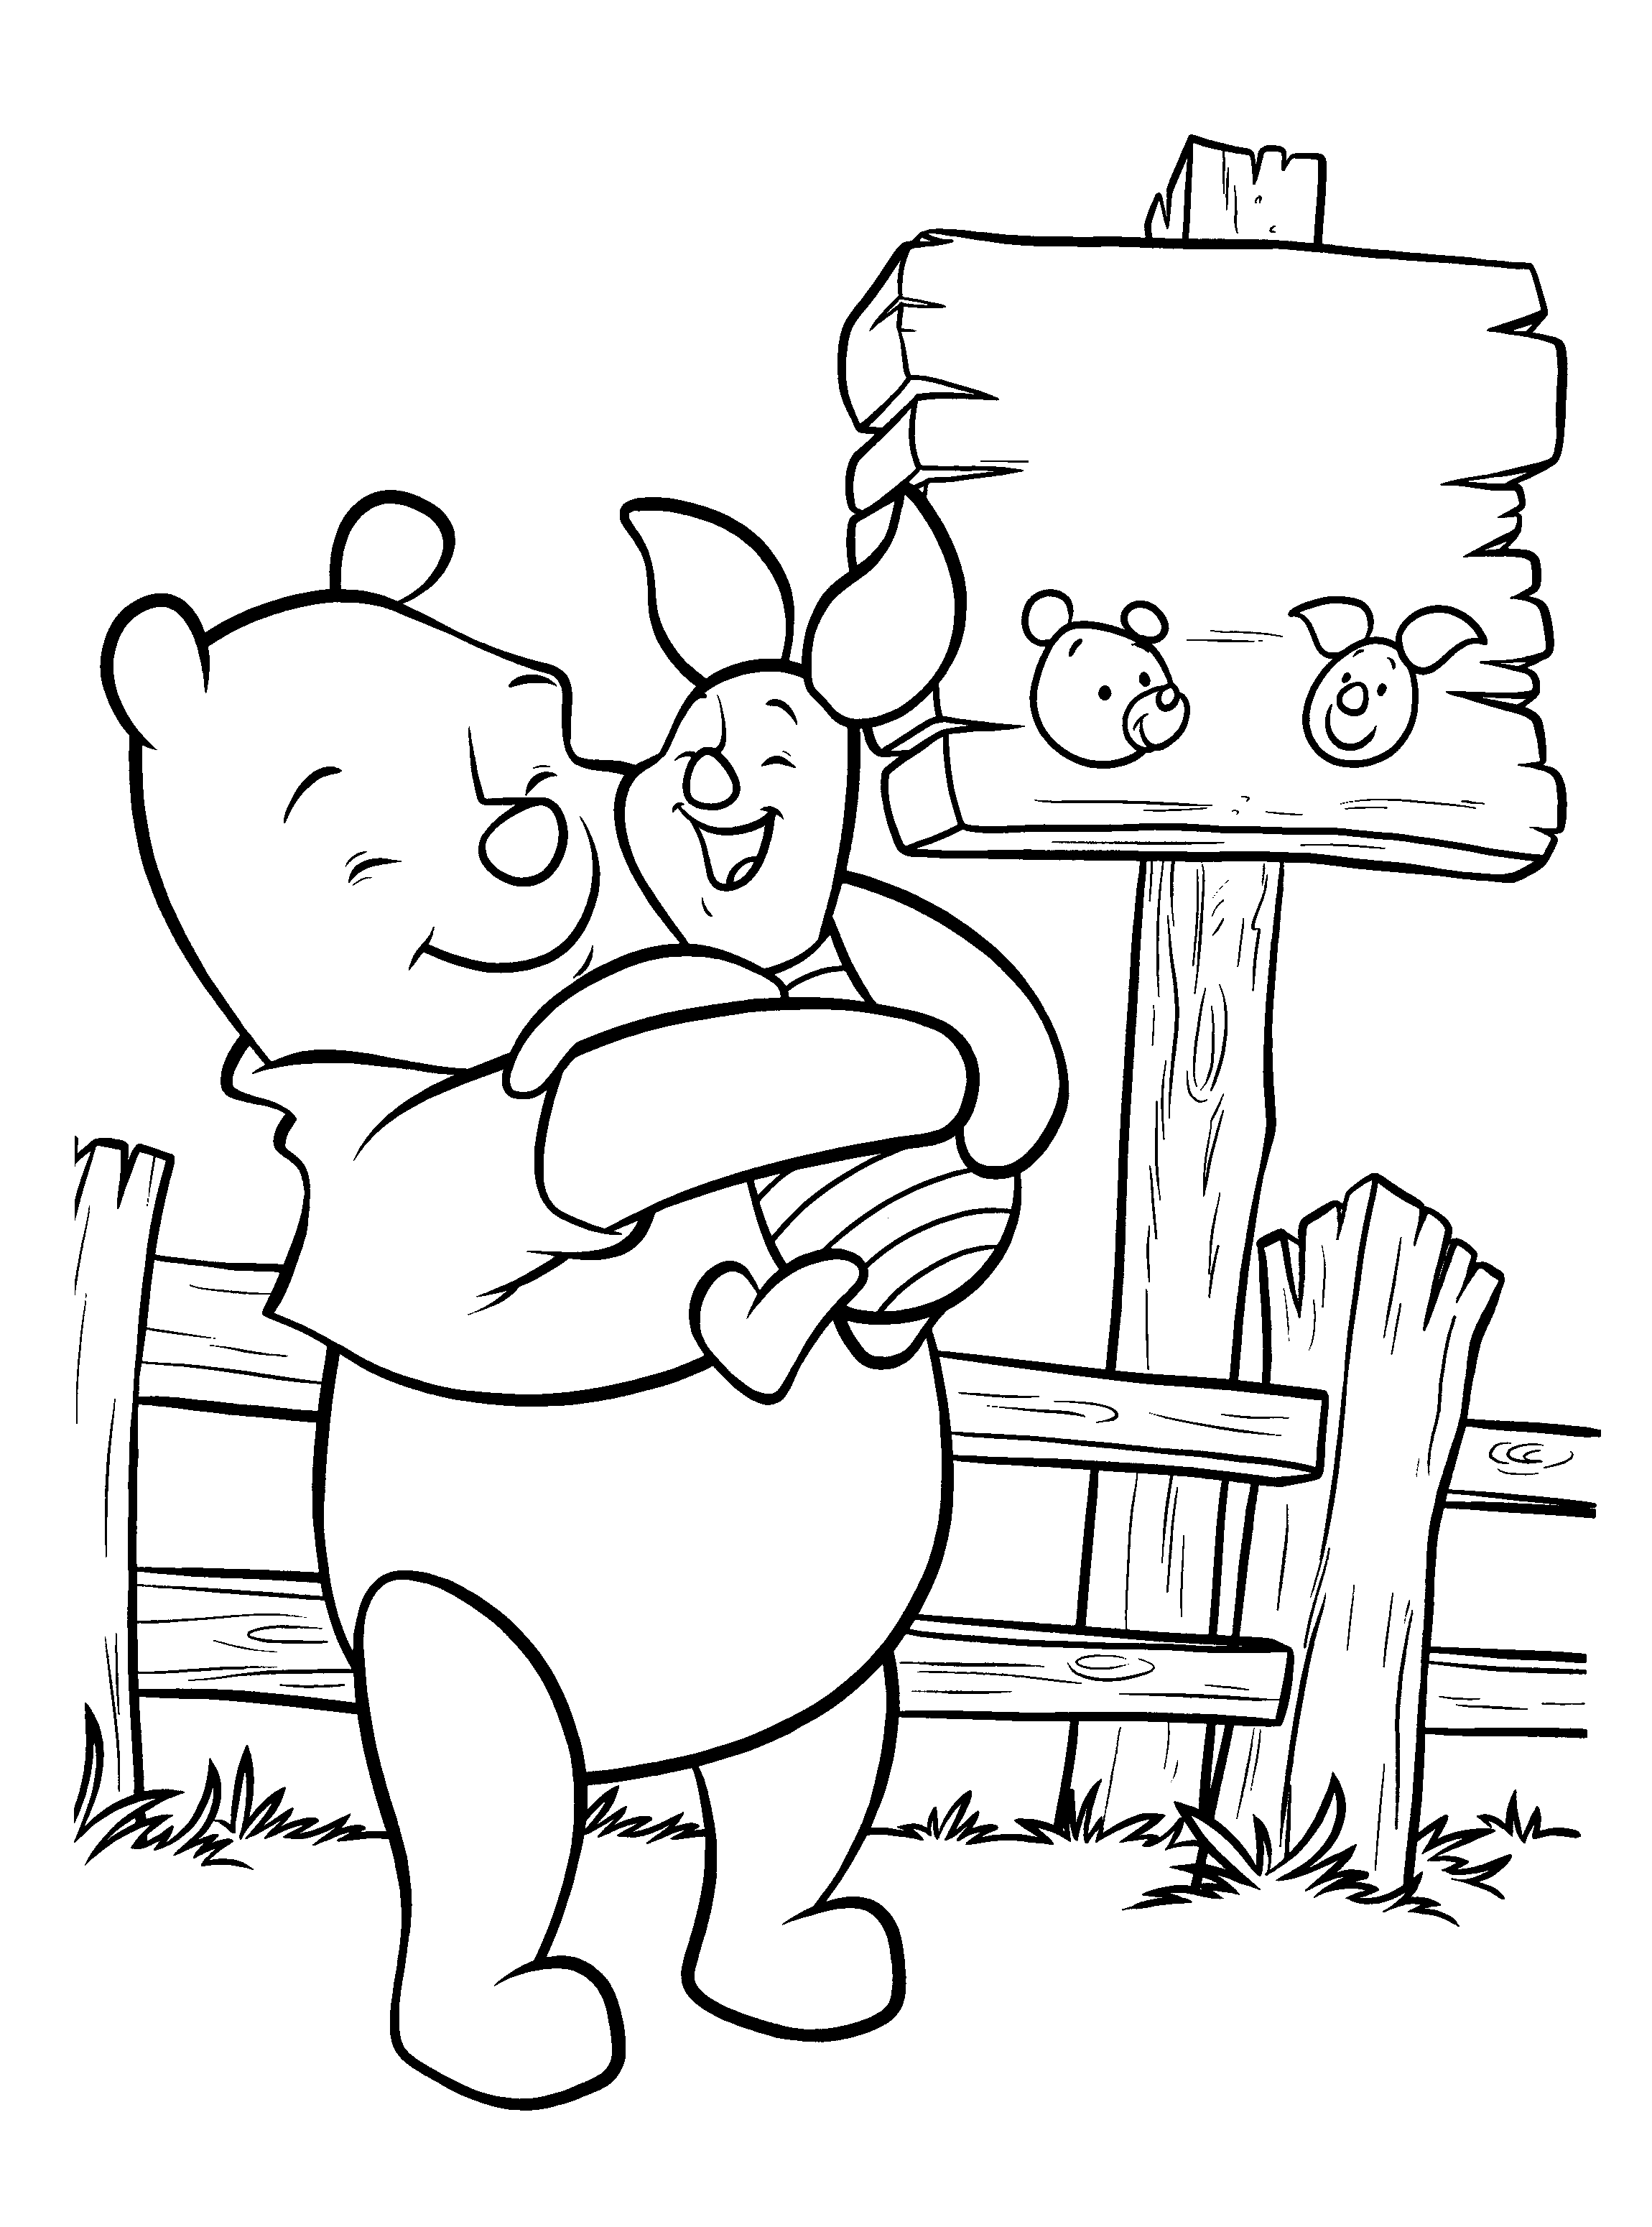 Gambar Winnie Pooh Coloring Pages Coloringpages1001 Gambar